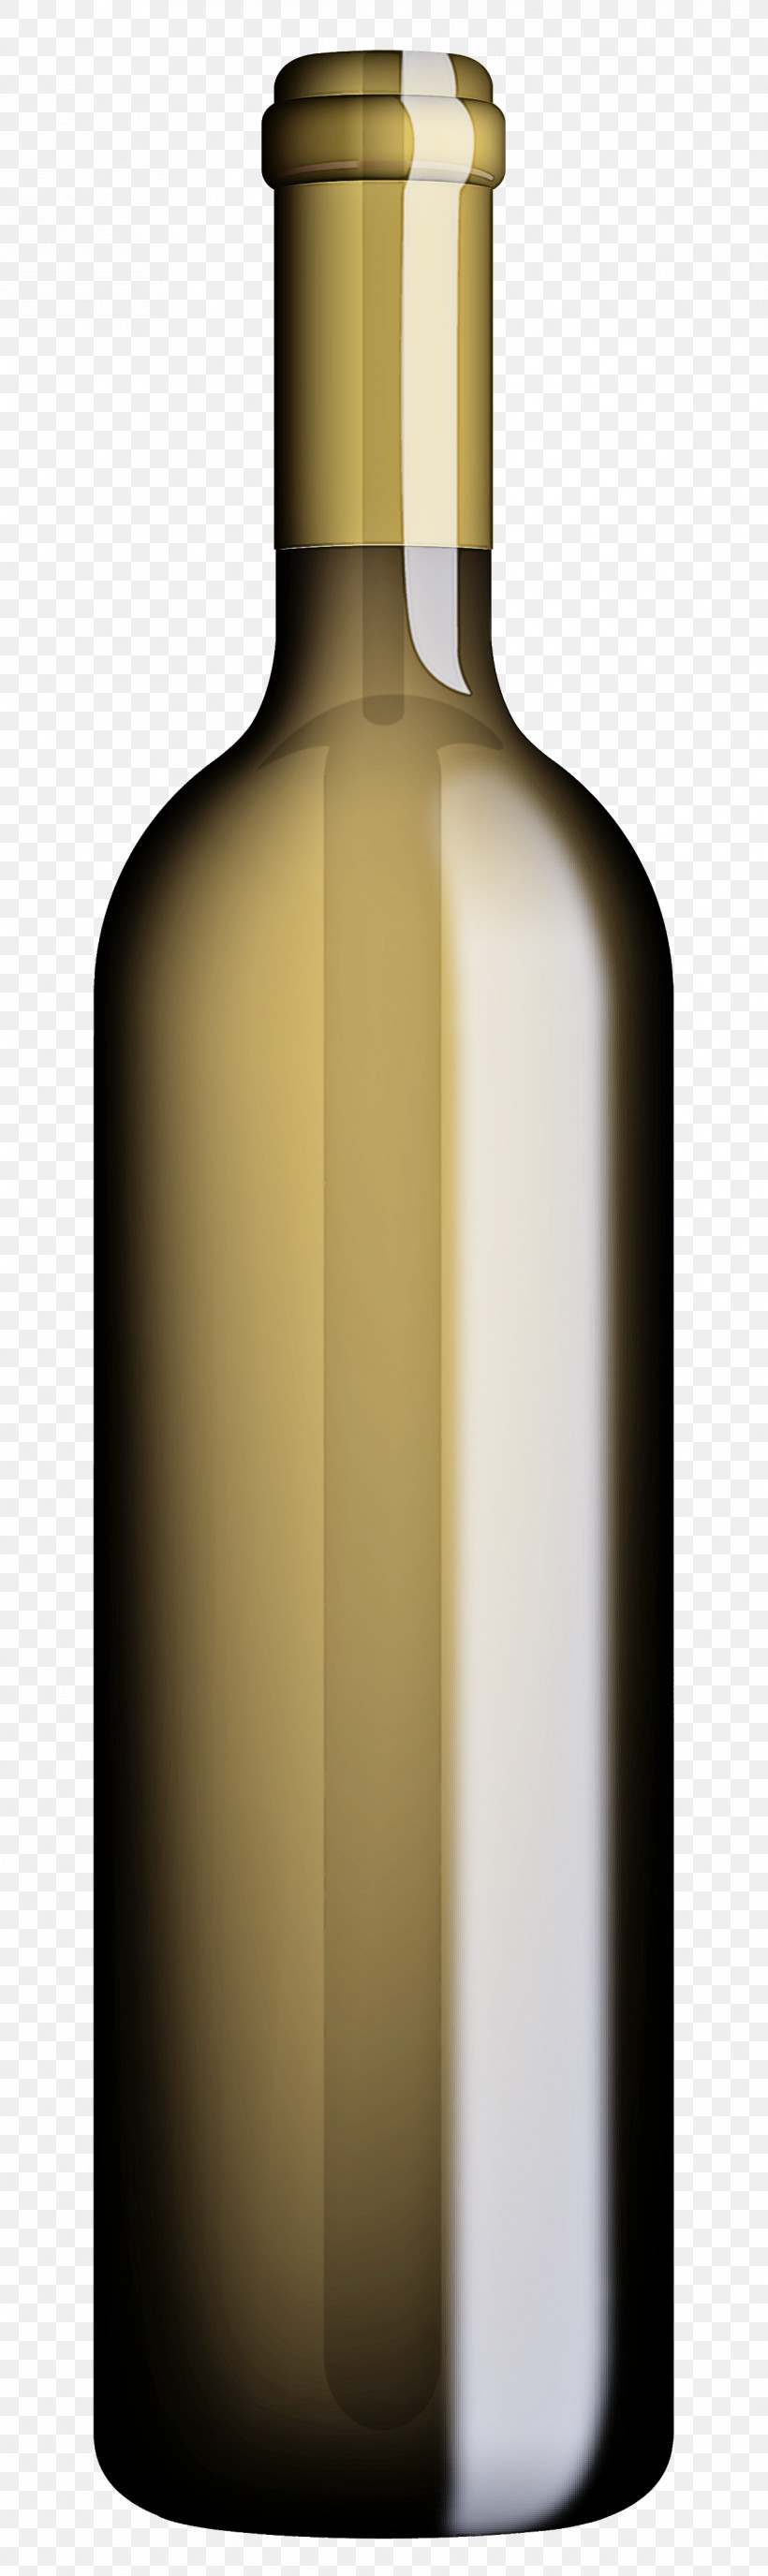 Bottle Glass Bottle Liqueur Drink Wine Bottle, PNG, 1192x4000px, Bottle, Drink, Glass Bottle, Liqueur, Wine Bottle Download Free